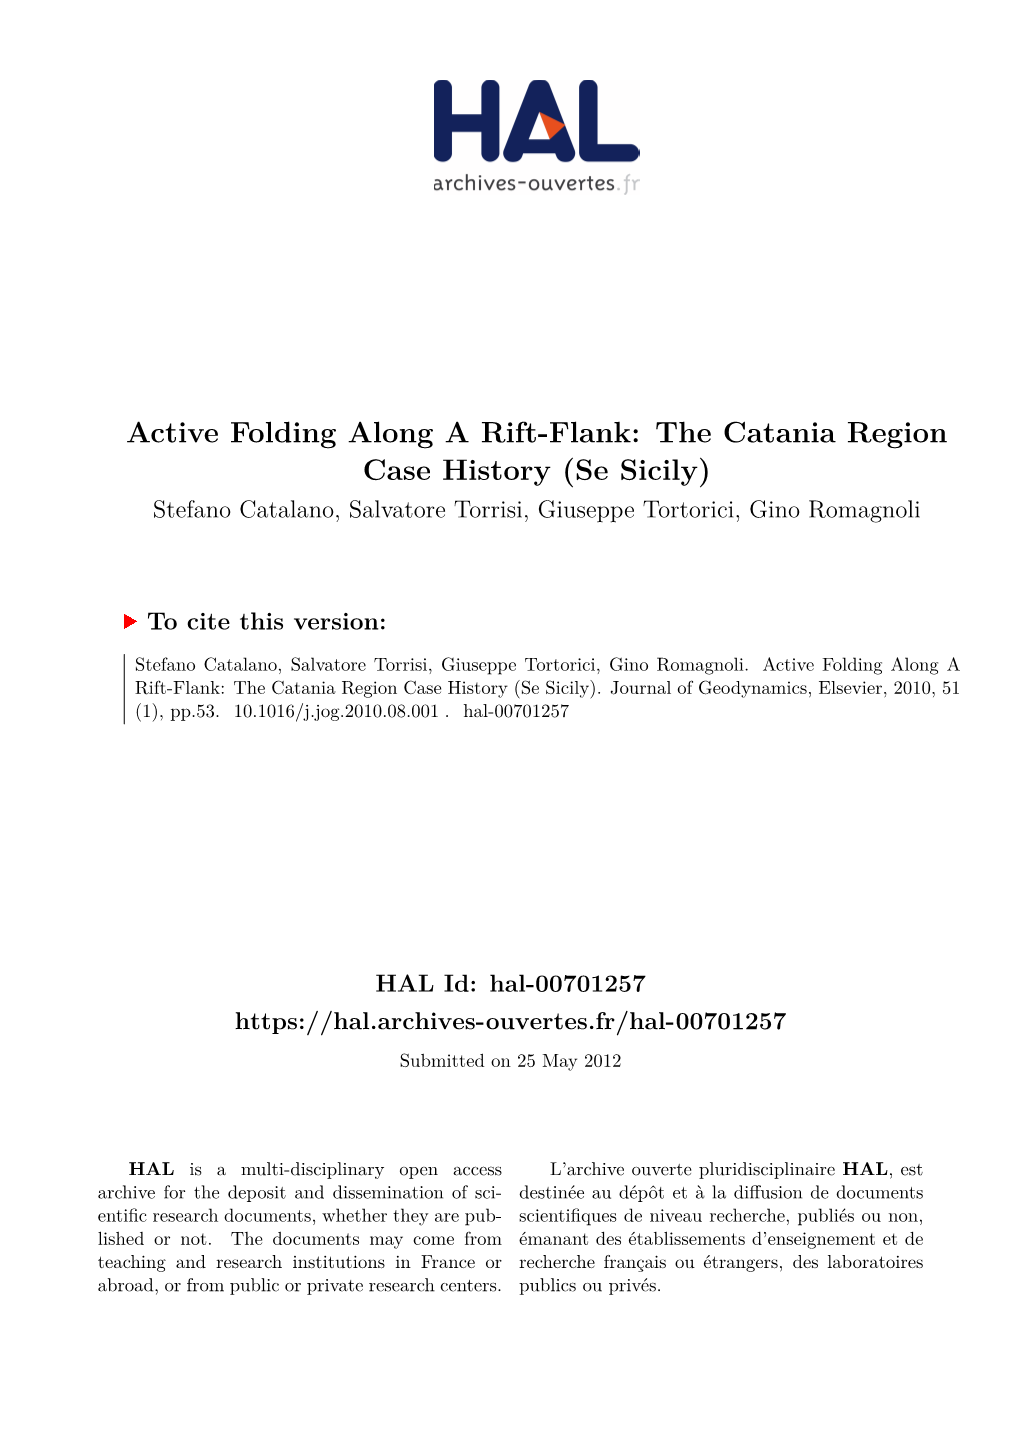 Active Folding Along a Rift-Flank: the Catania Region Case History (Se Sicily) Stefano Catalano, Salvatore Torrisi, Giuseppe Tortorici, Gino Romagnoli